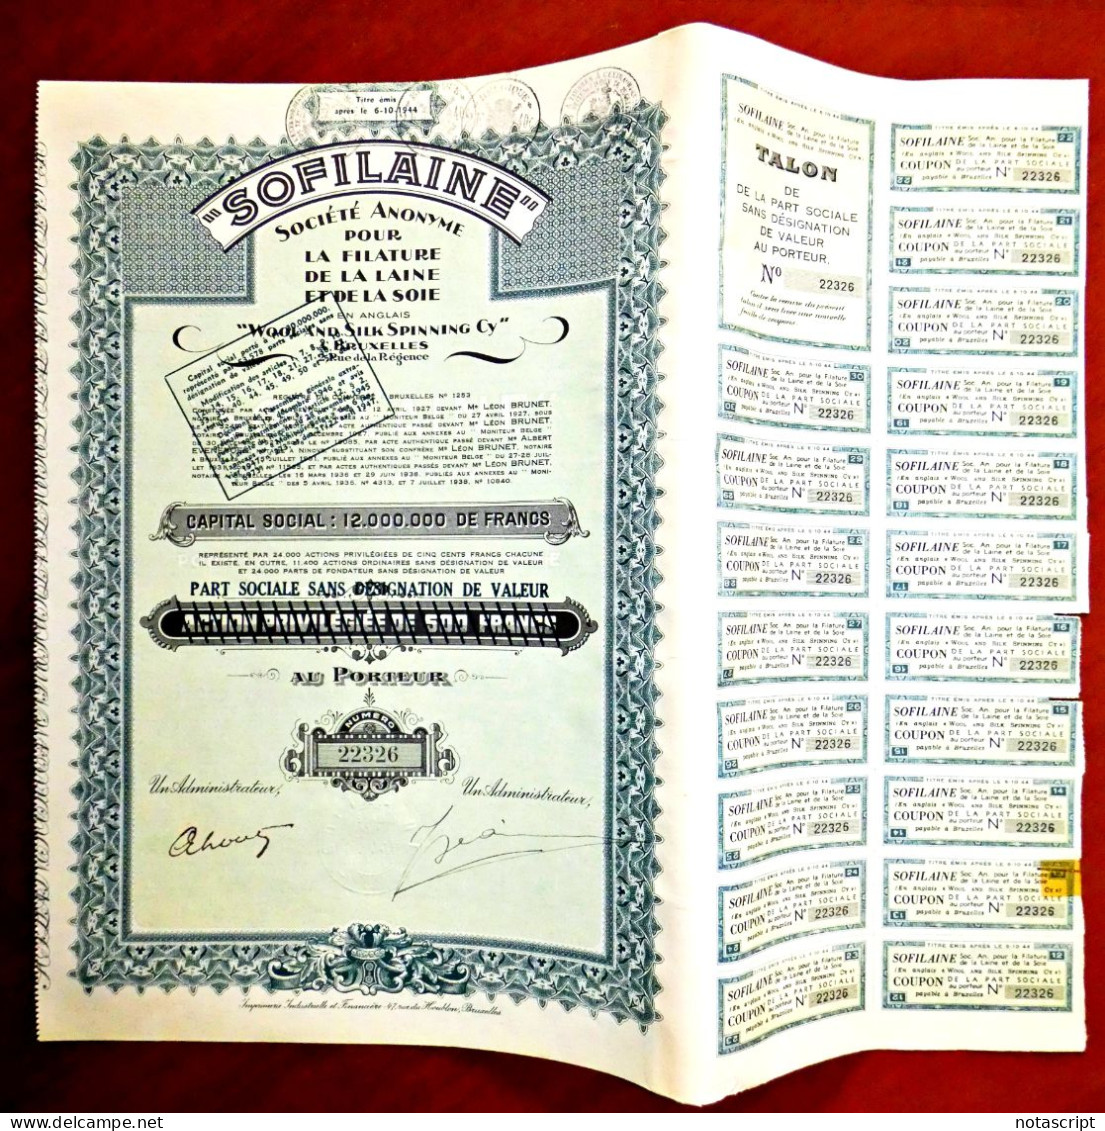 Sofilaine  ,wool & Silk Spinning 1938 Belgium Share Certificate - Textile